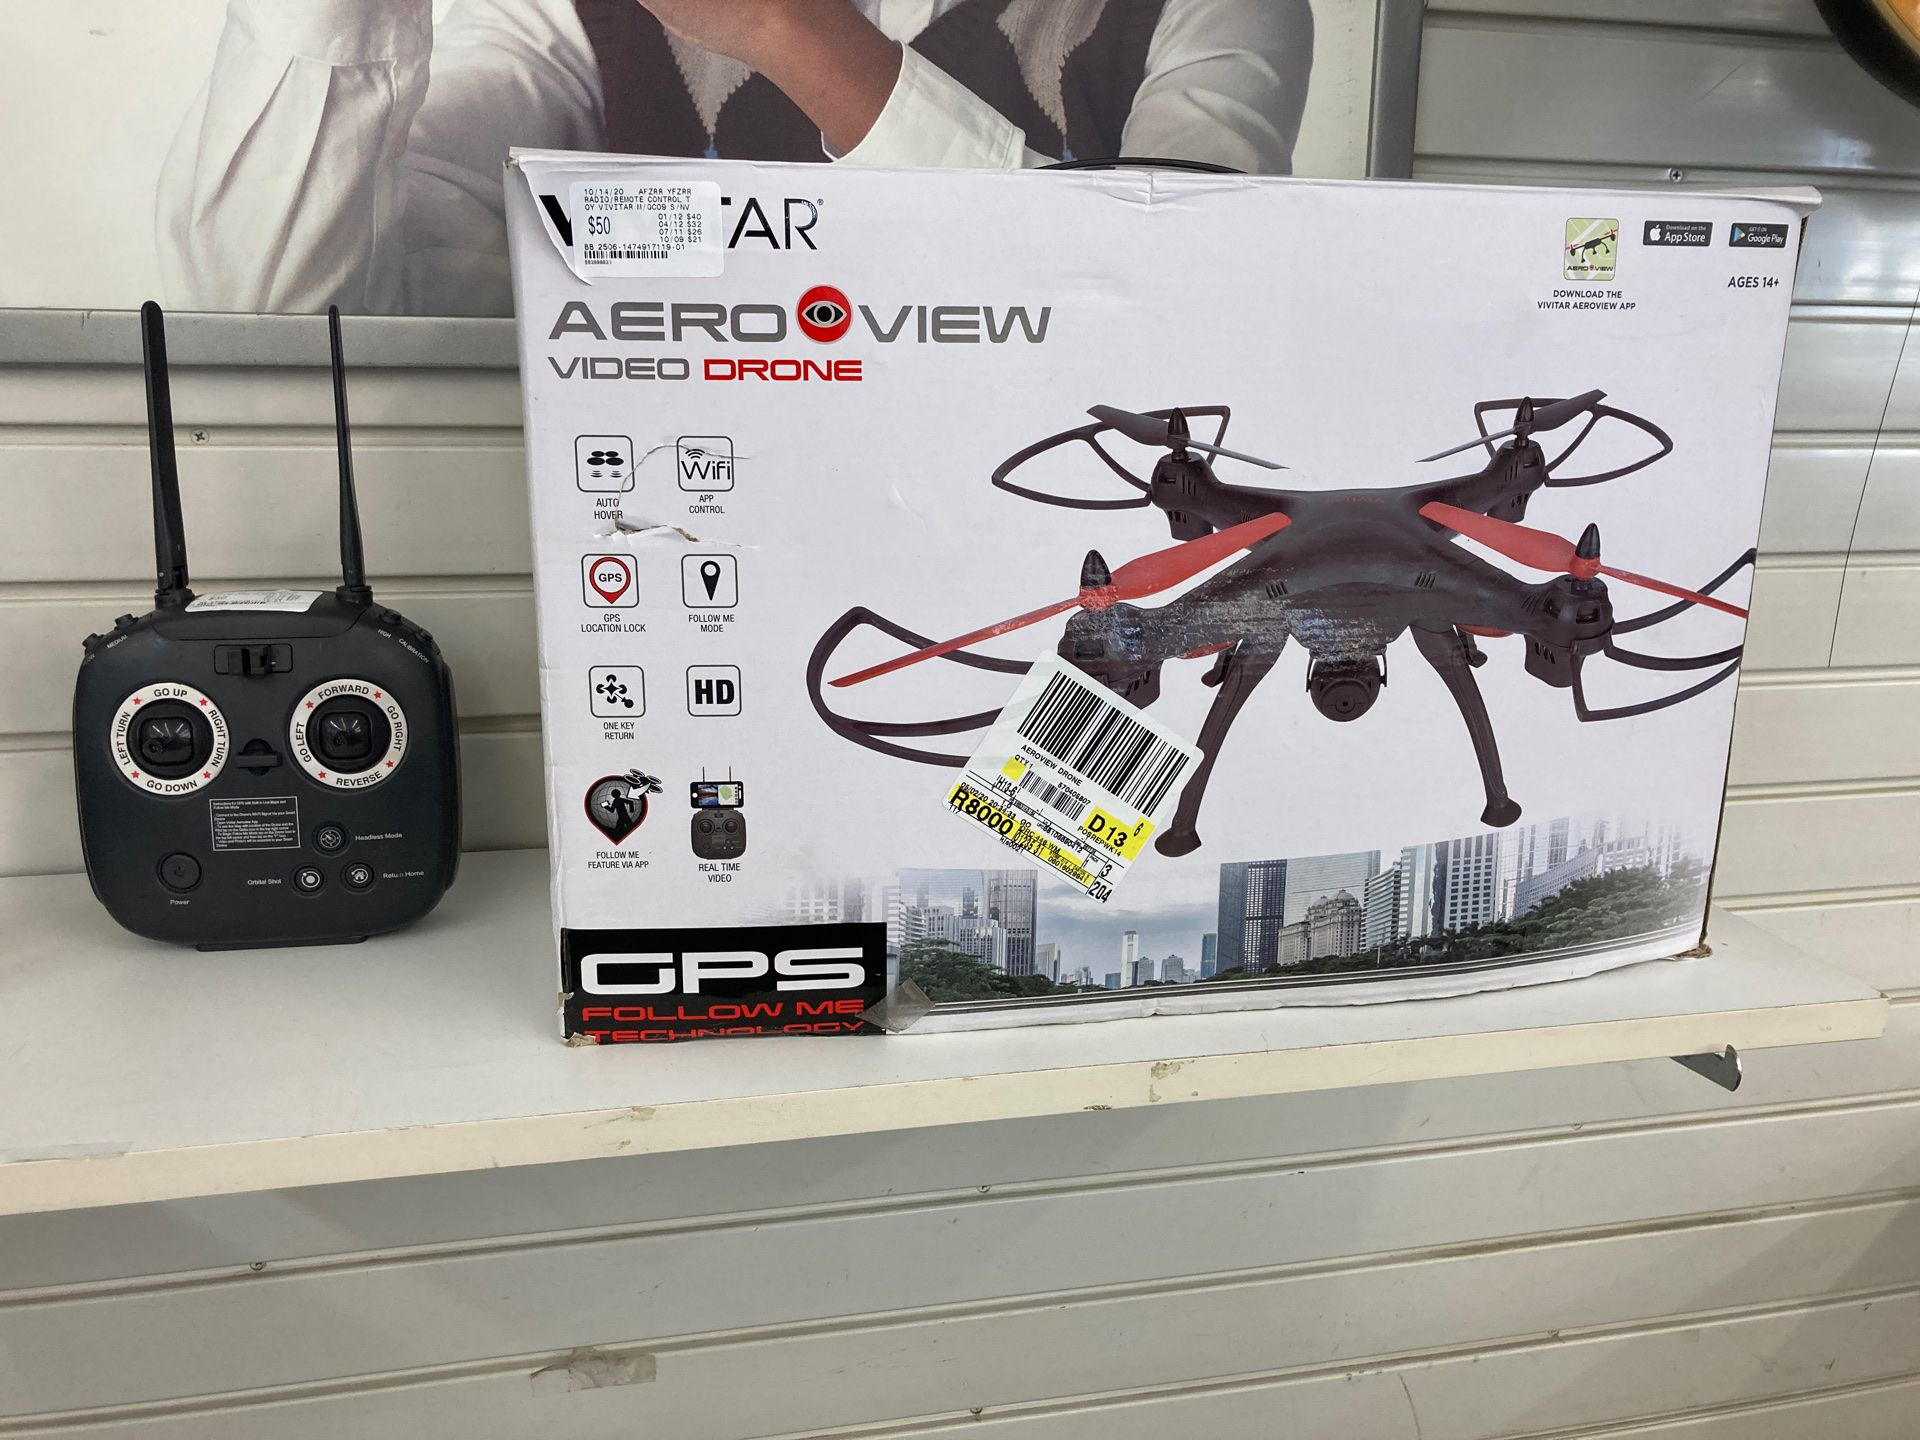 Vivitar video drone